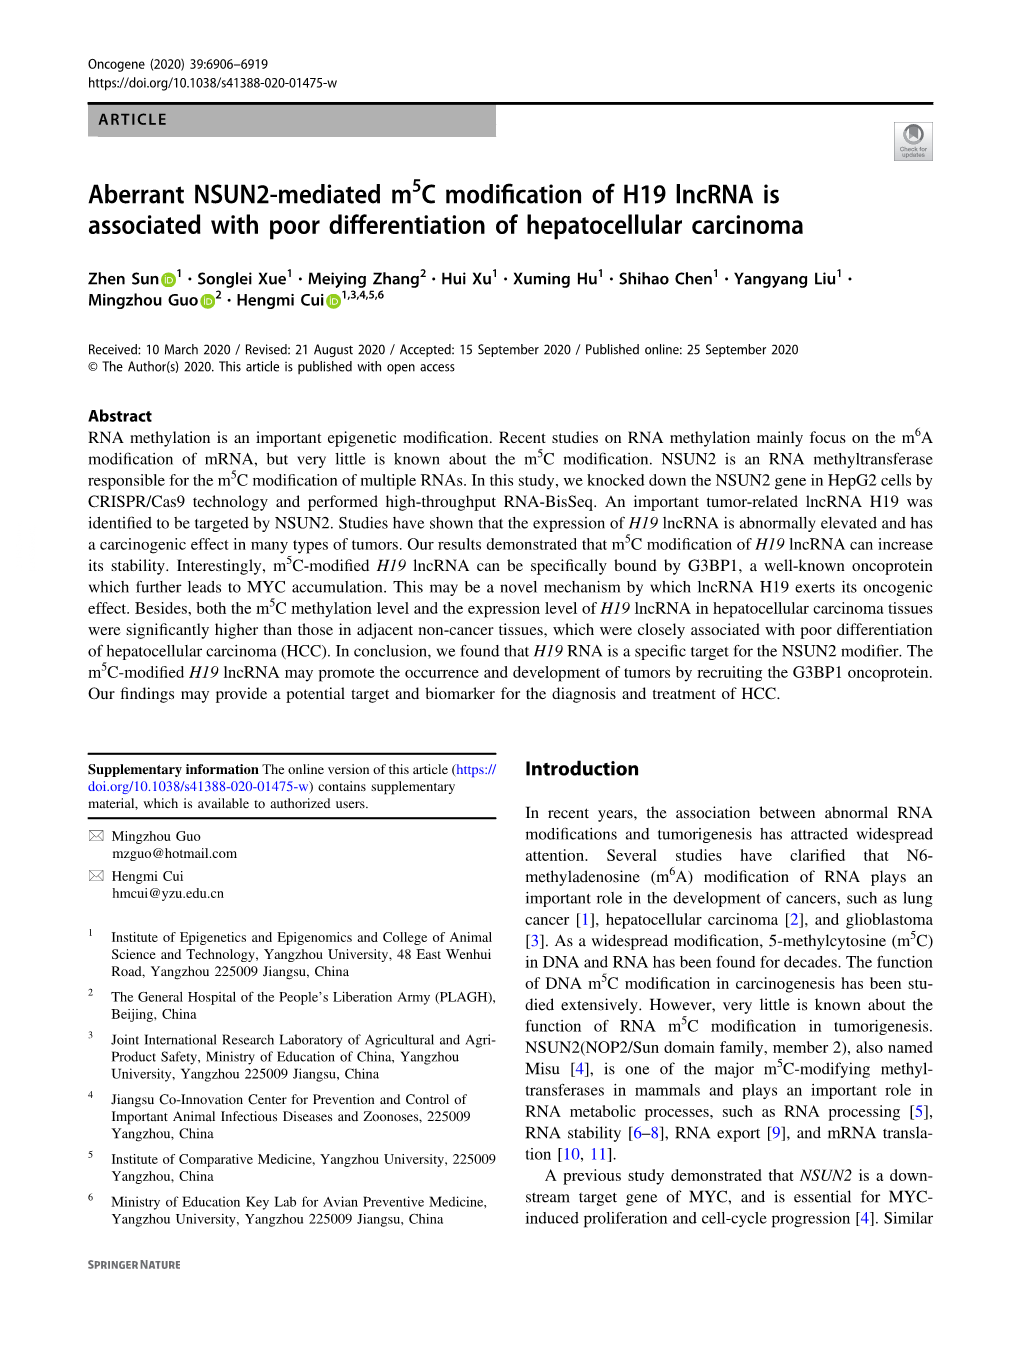 Aberrant NSUN2-Mediated M5c Modification of H19 Lncrna Is